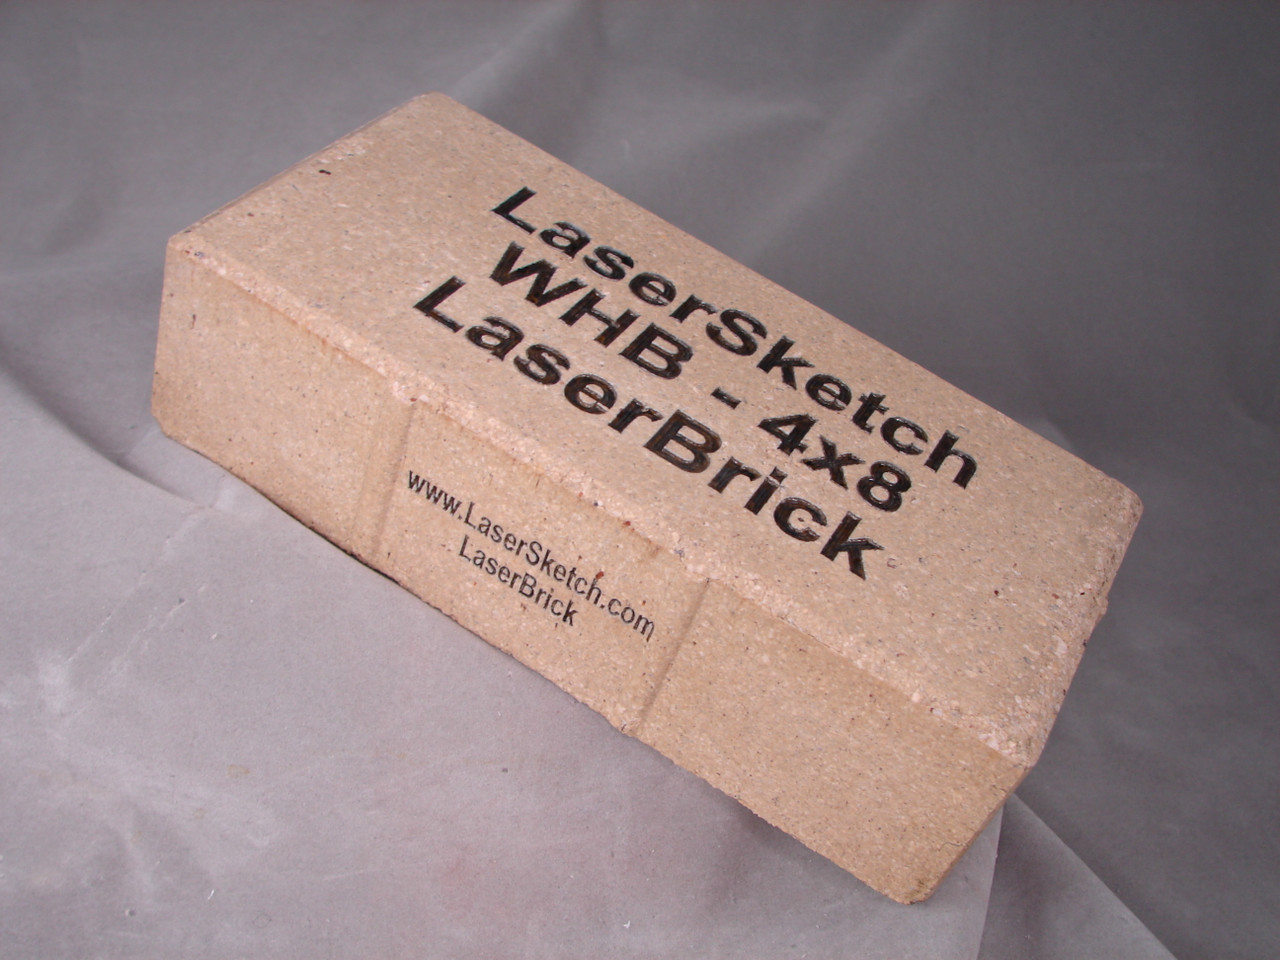 (100)-WHB-4" x 8" x 2-1/4", LaserGrade White (Ivory) Street Paver Bricks, with Lugs - 100 count